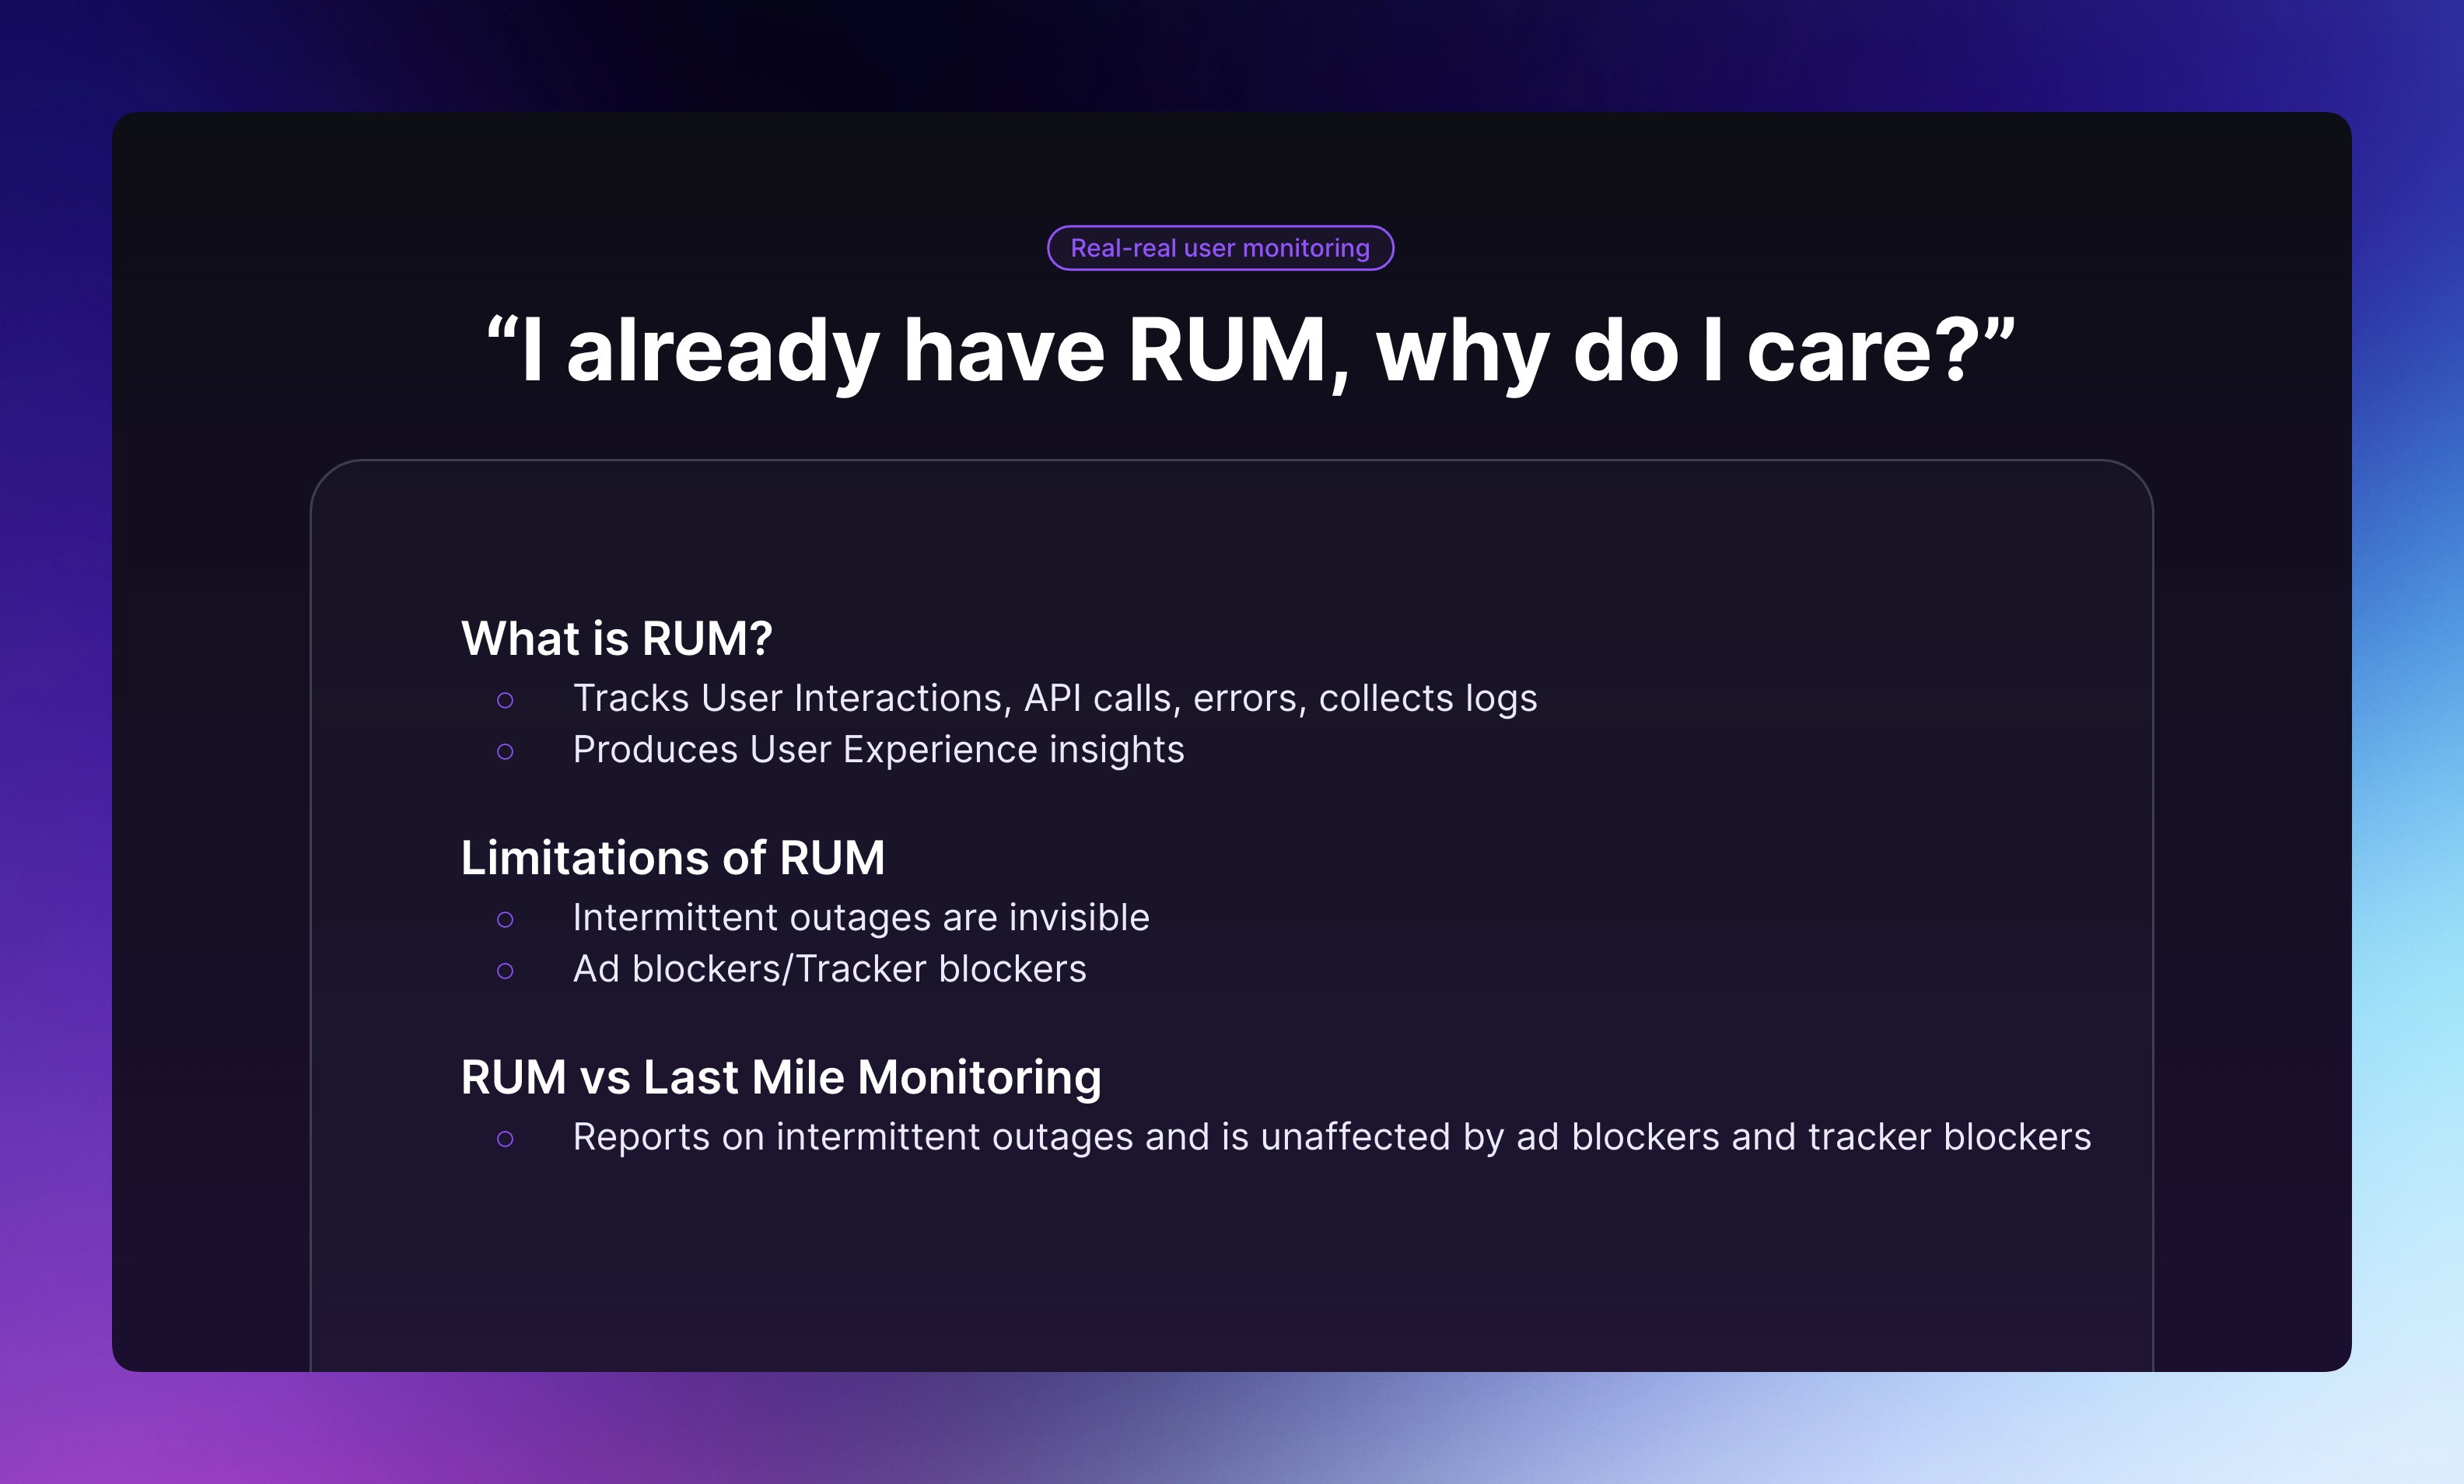 I already have RUM, why do I care?